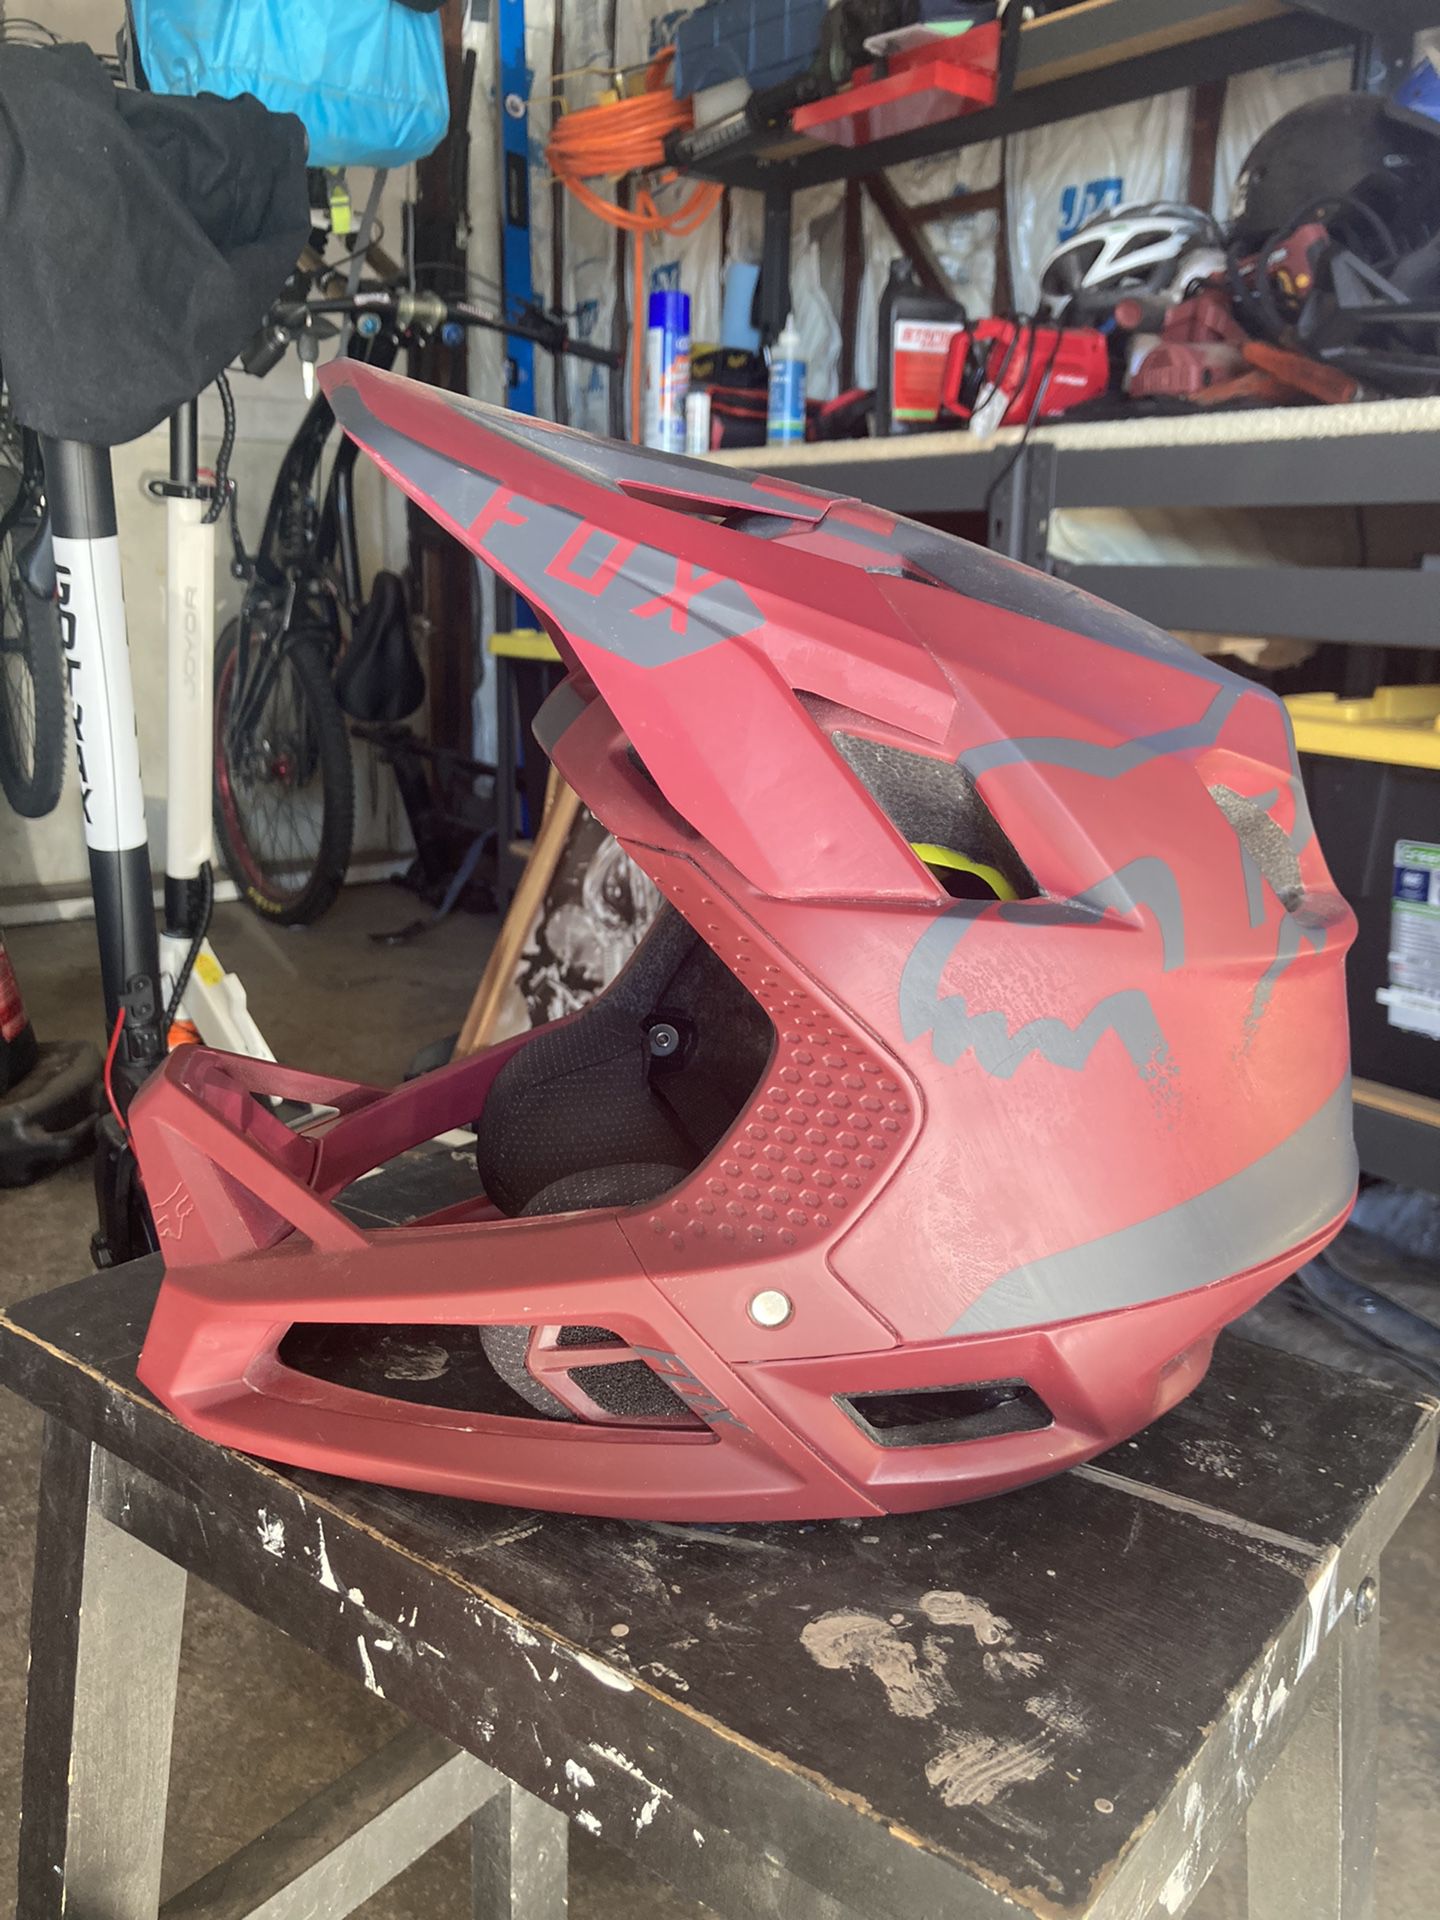 Fox Pro frame Downhill Helmet New 